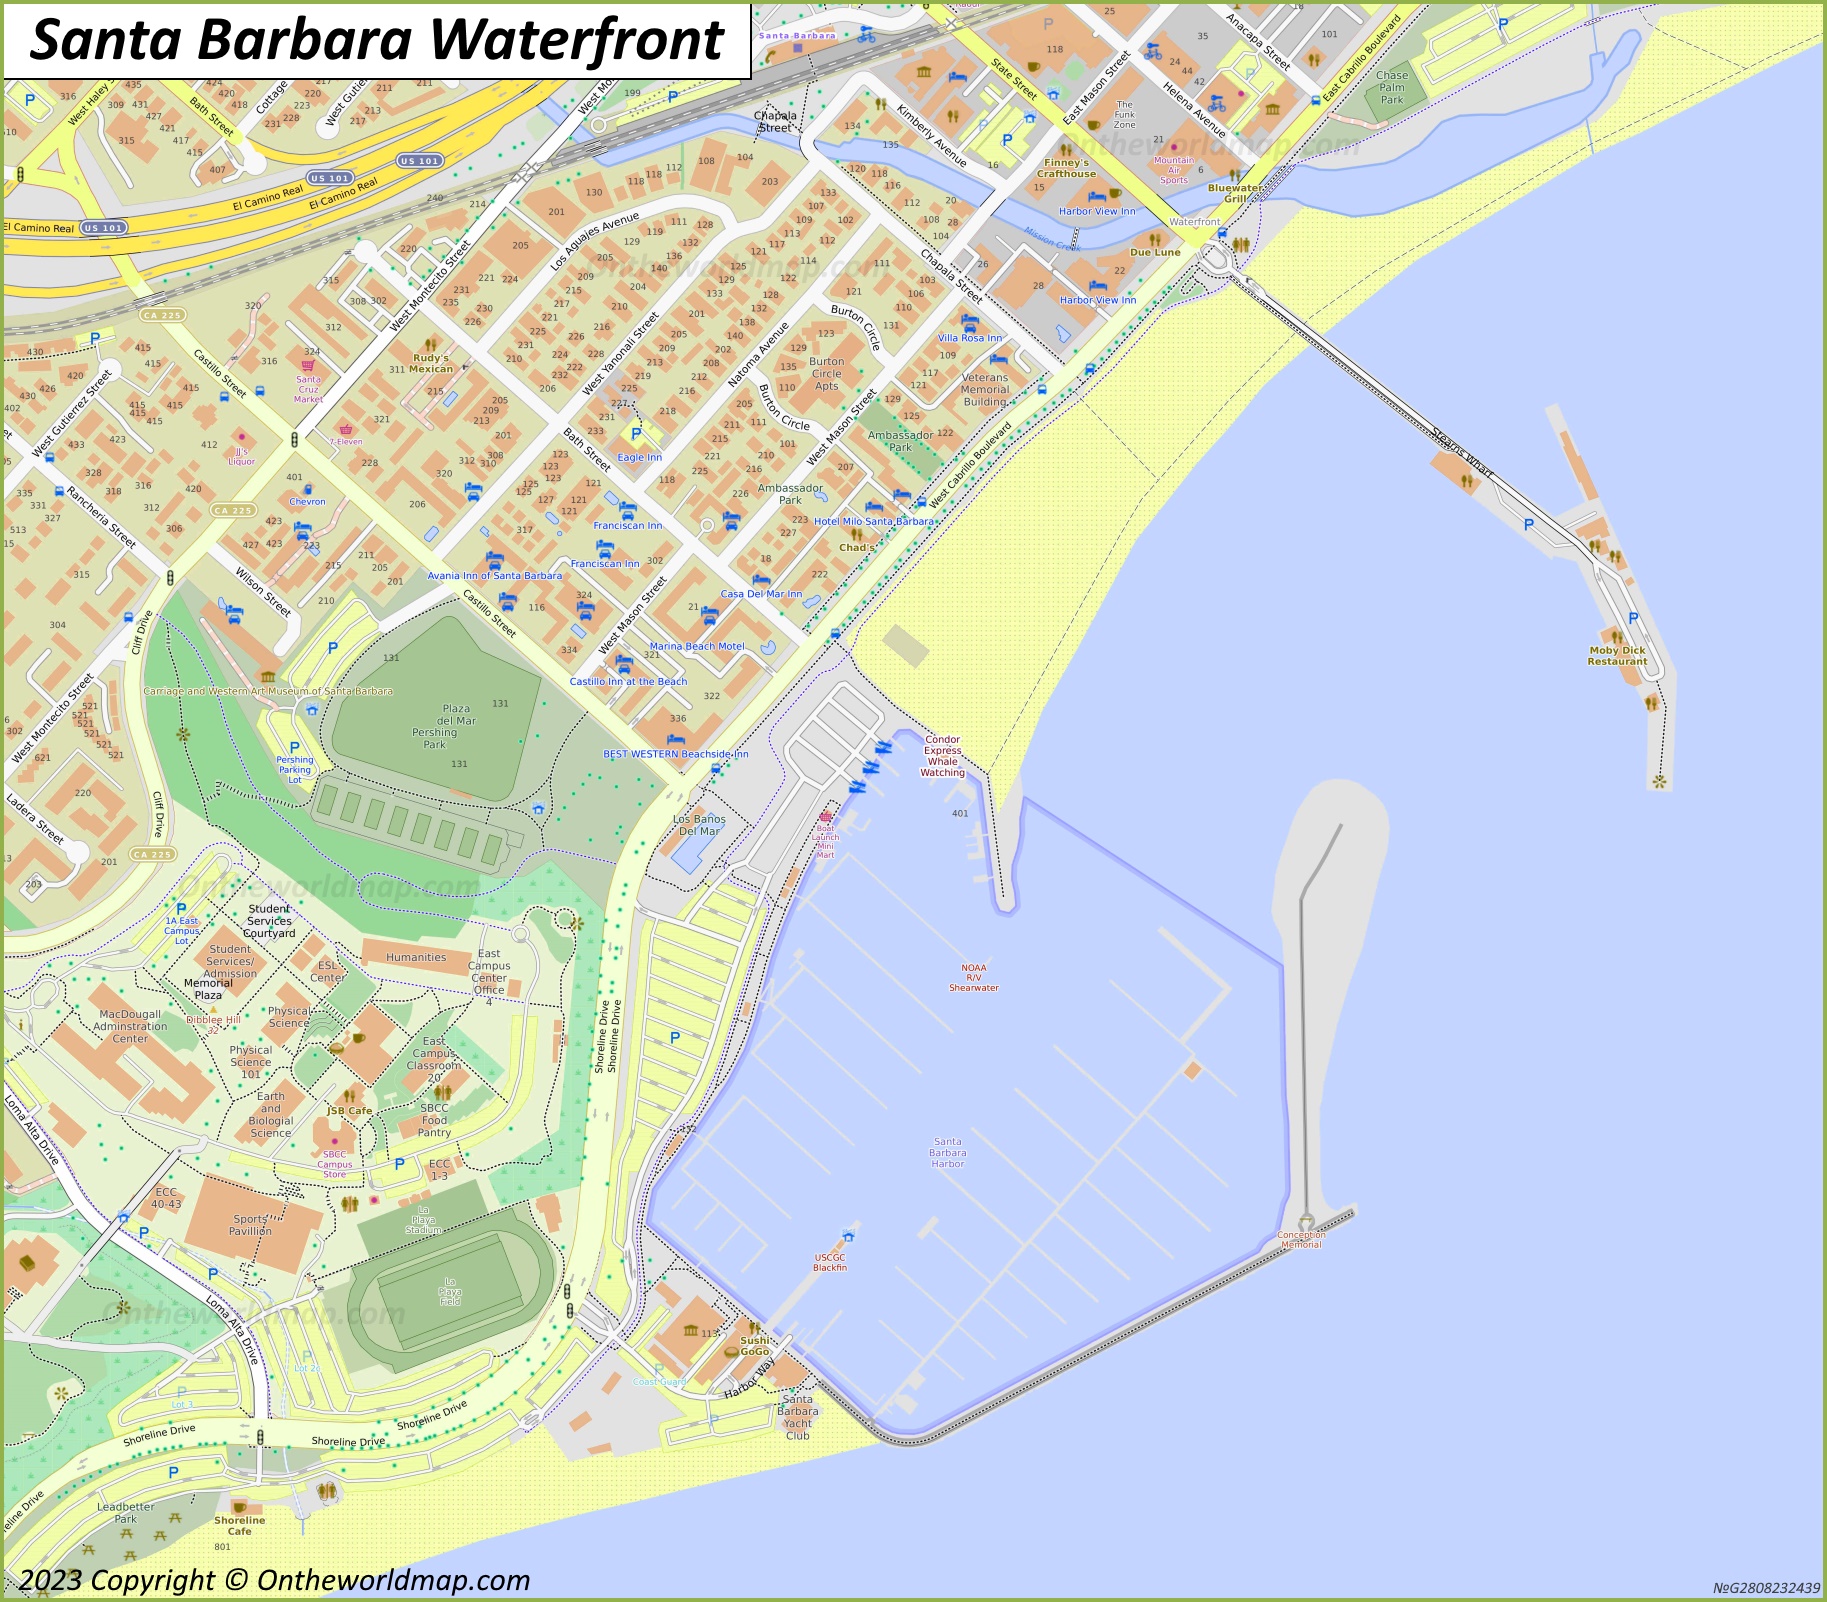 Santa Barbara Waterfront Map - Ontheworldmap.com